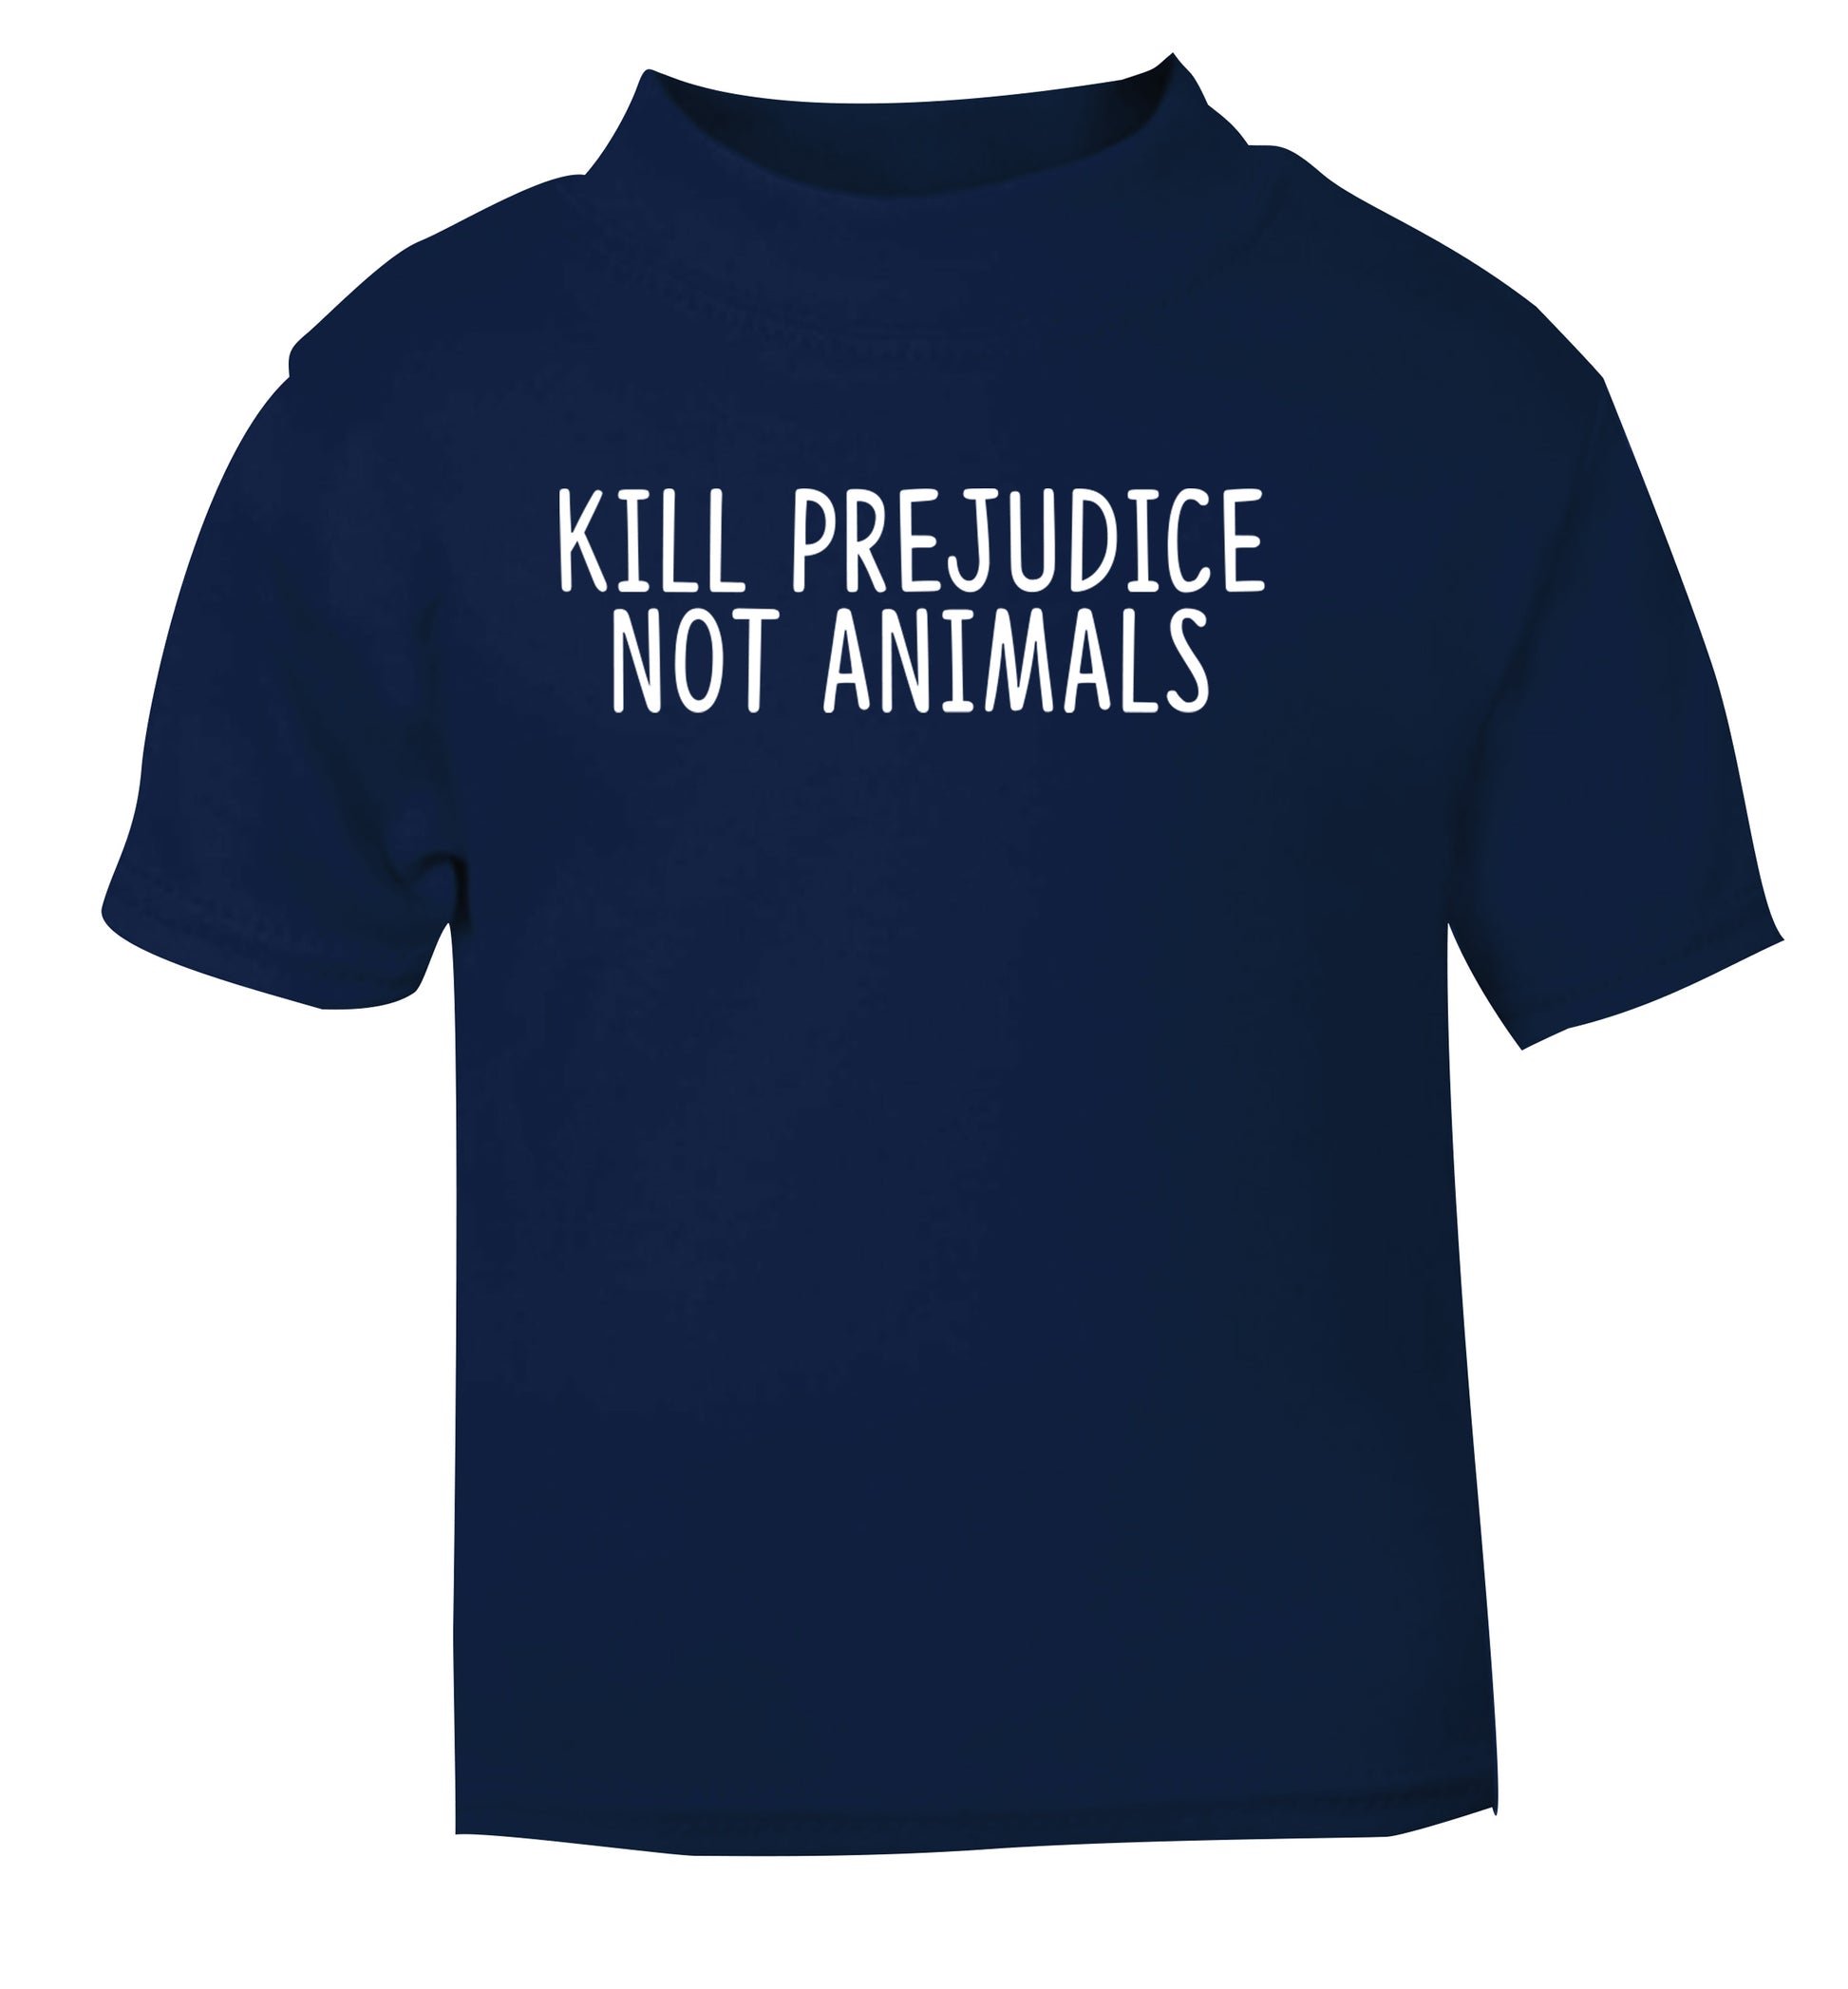 Kill Prejudice Not Animals navy Baby Toddler Tshirt 2 Years